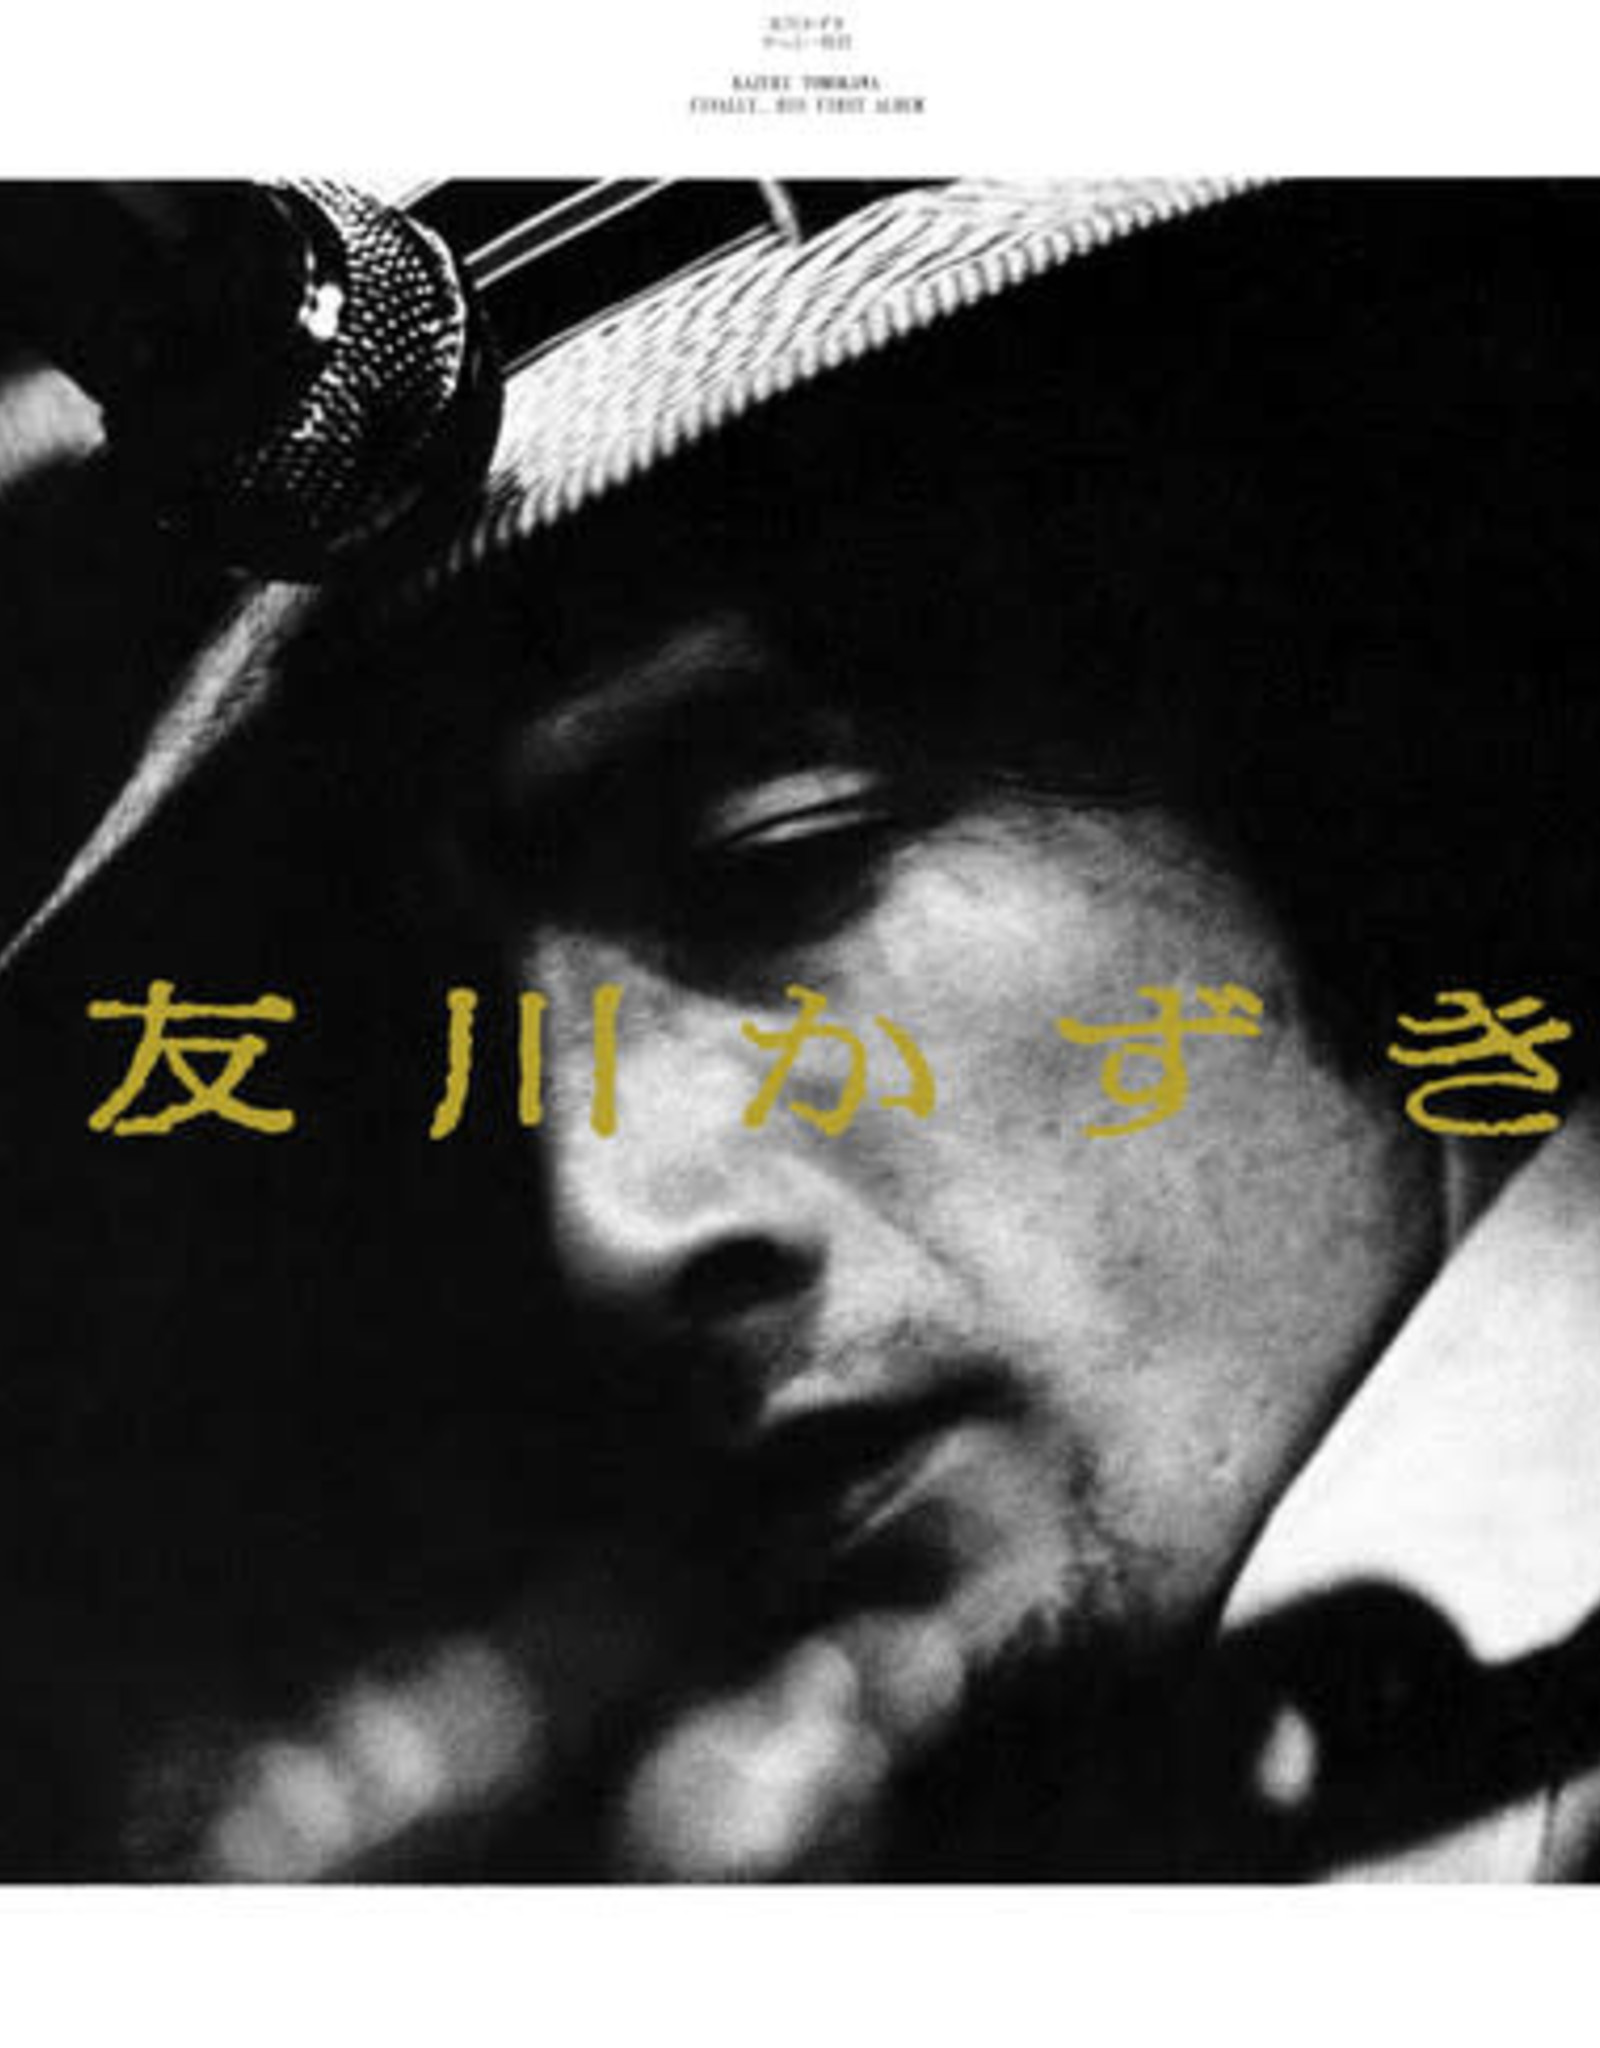 Kazuki Tomokawa - Finally, His First Album